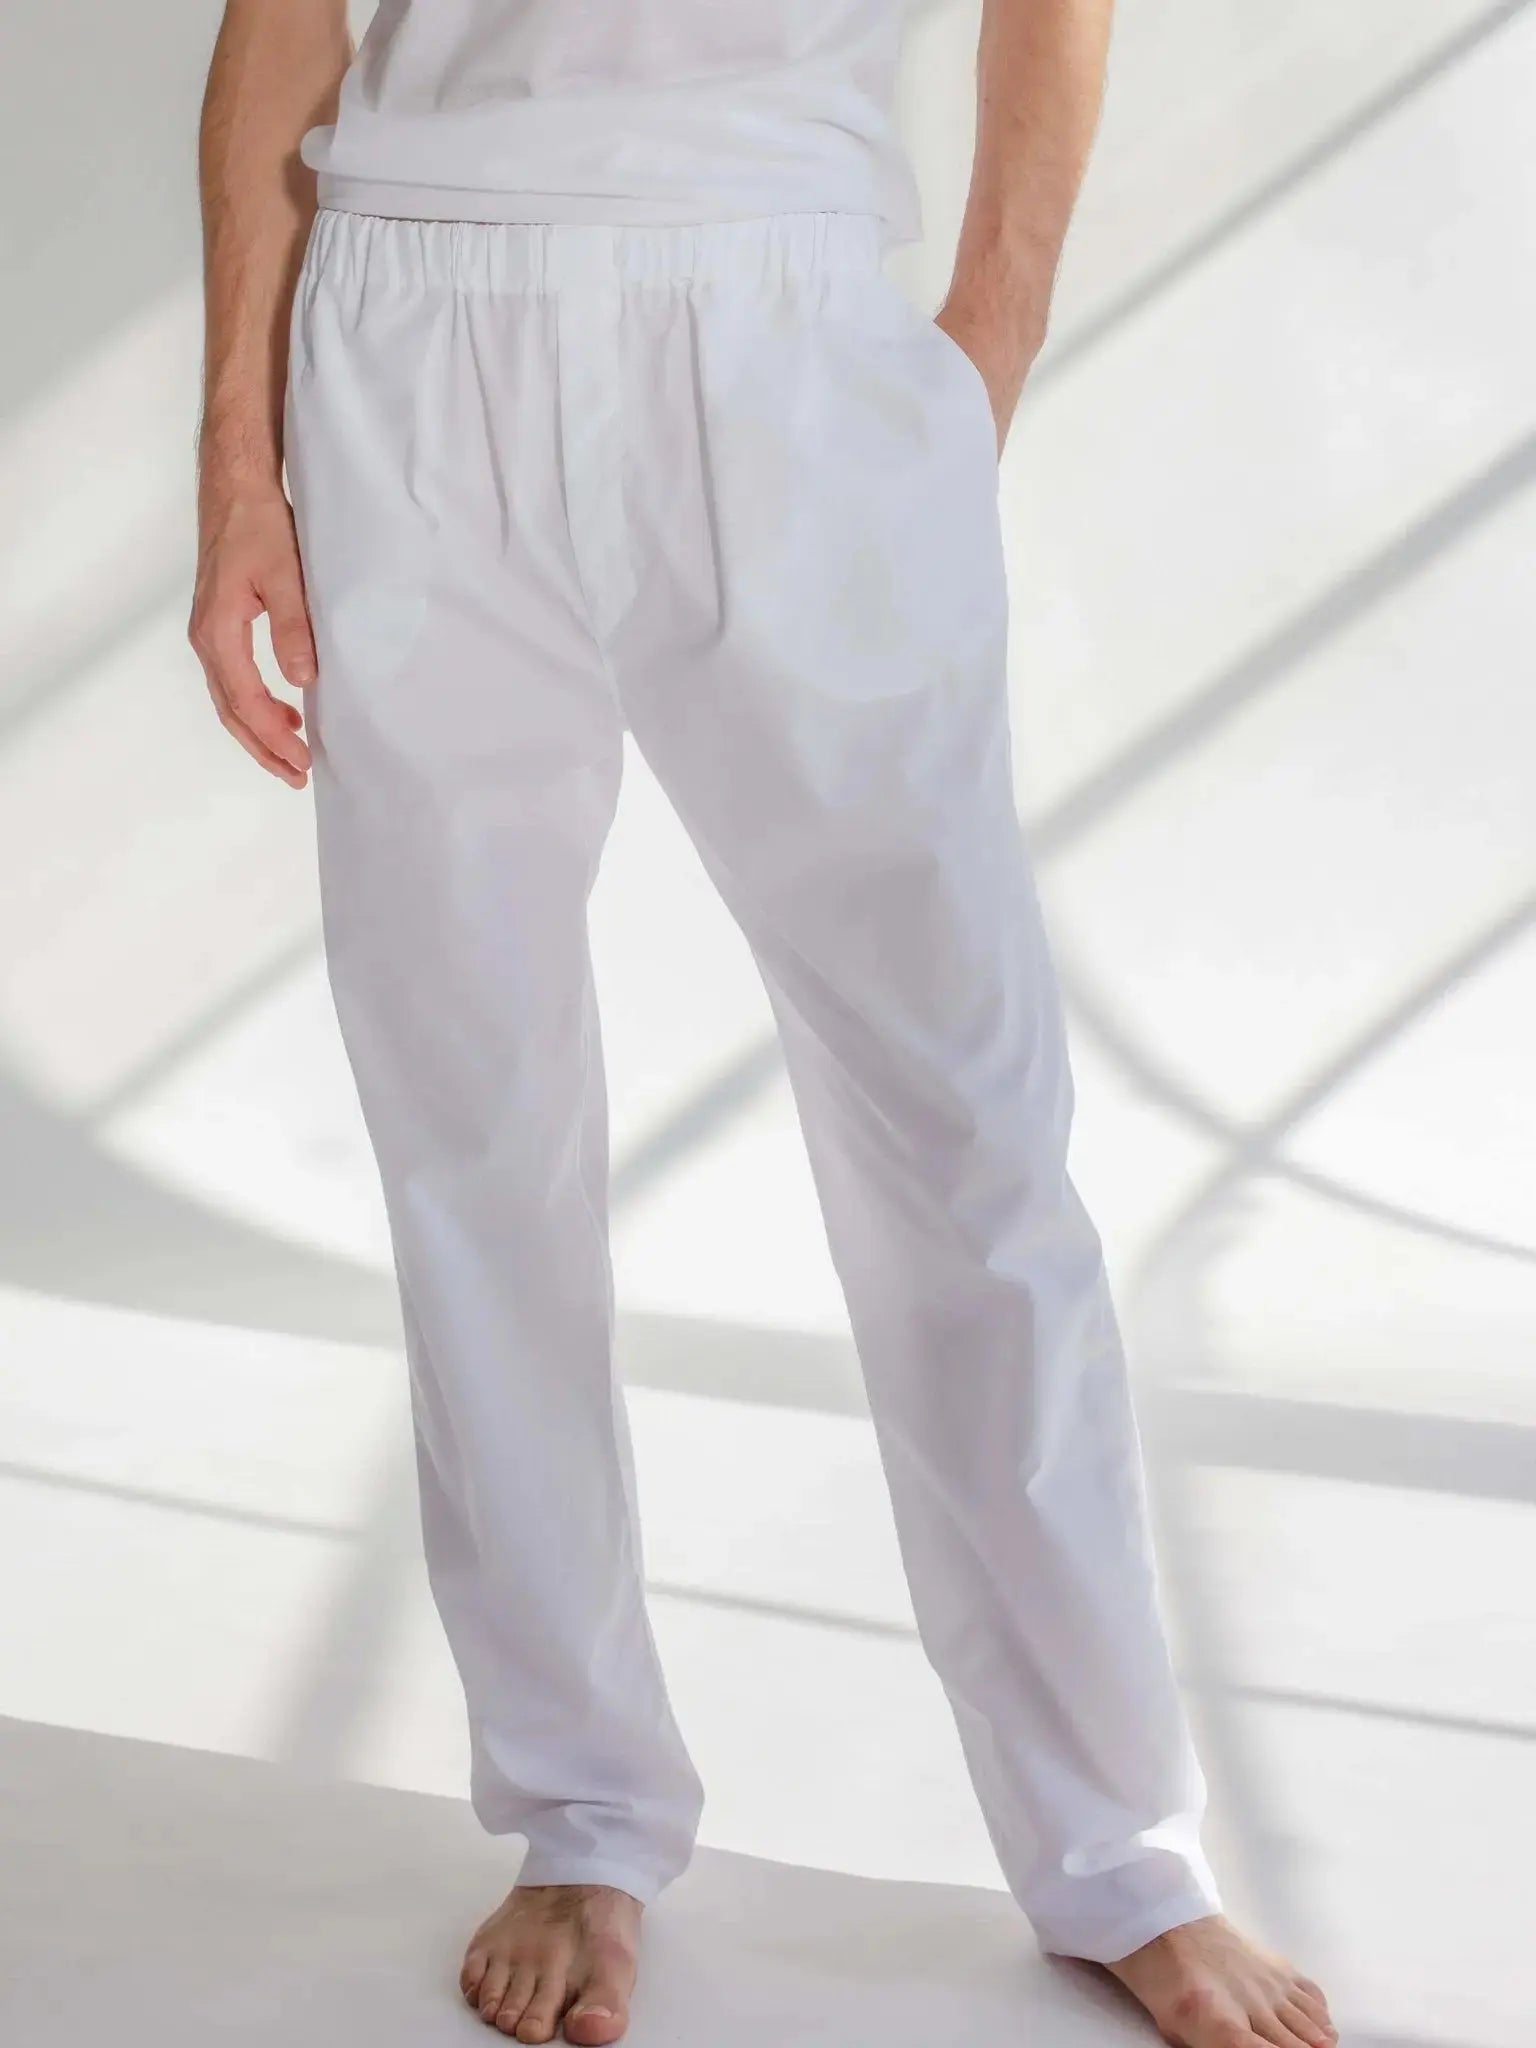 Plaid Pajama Pants for Men - 100% Cotton PJ Pants - Woven Sleepwear  Lightweight Lounge Sleep Pants for Men at Amazon Men's Clothing store